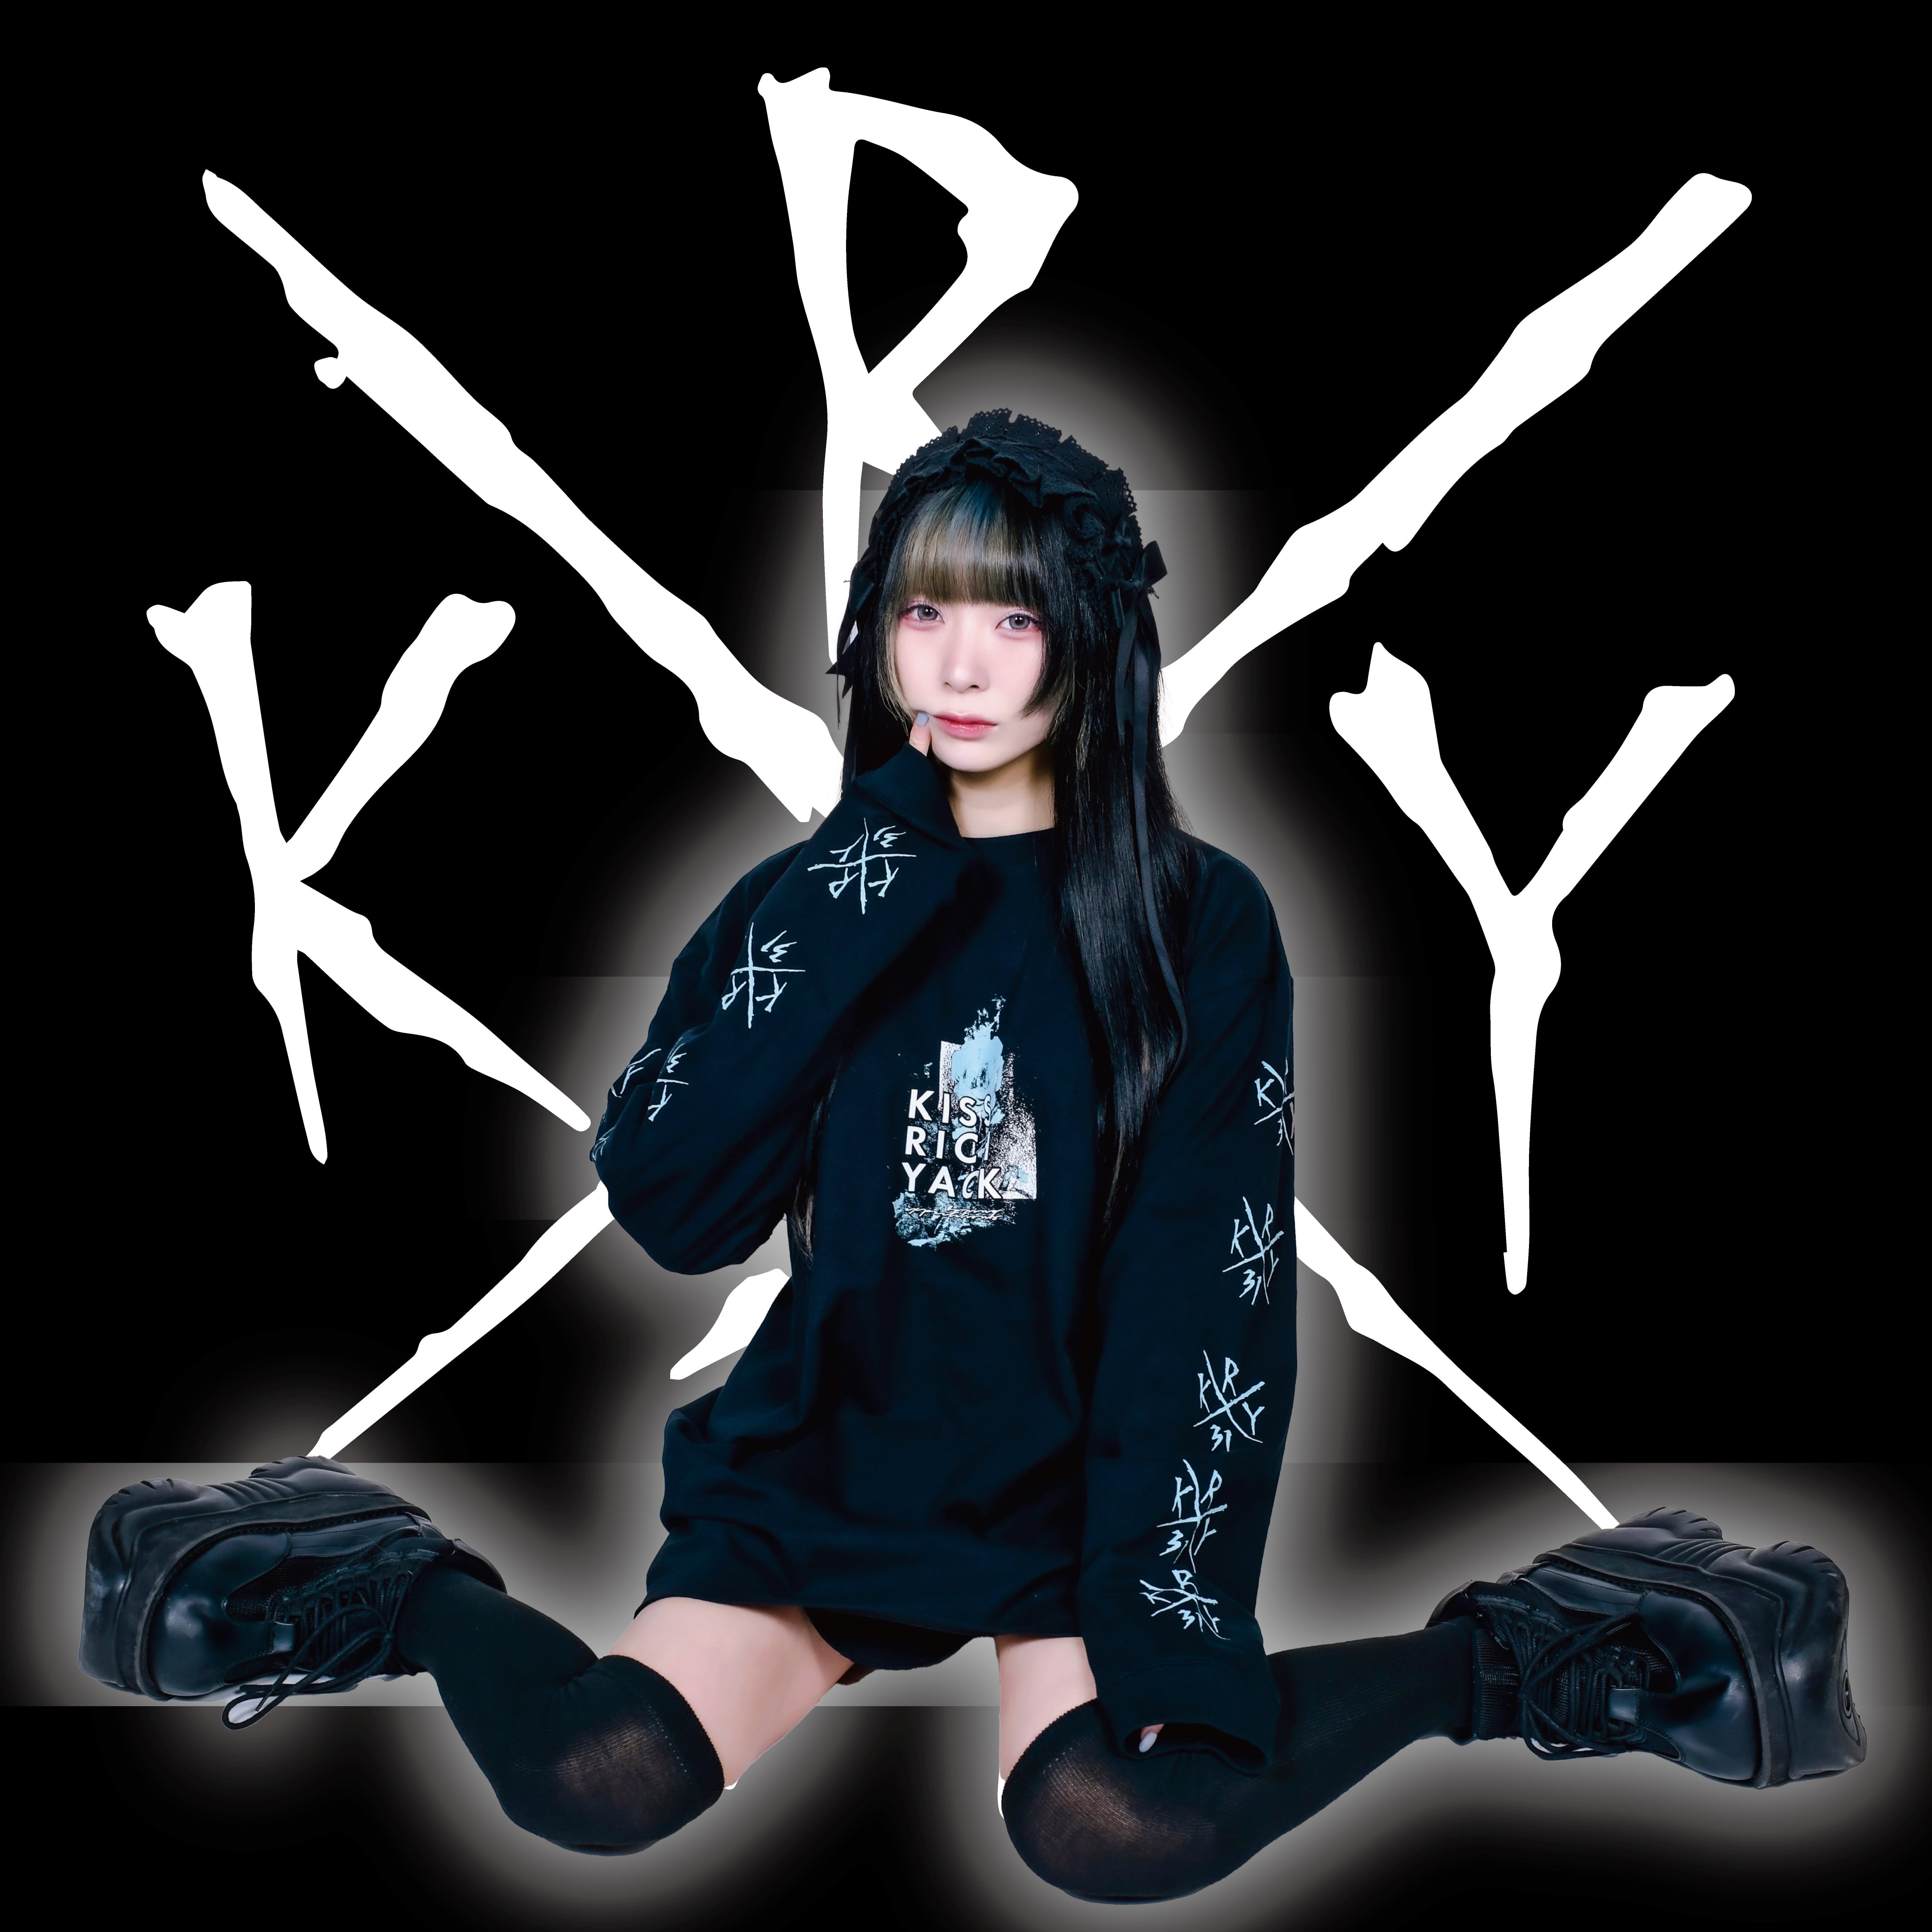 【値下げ不可】KRY clothing RMIS.PK 赤薔薇